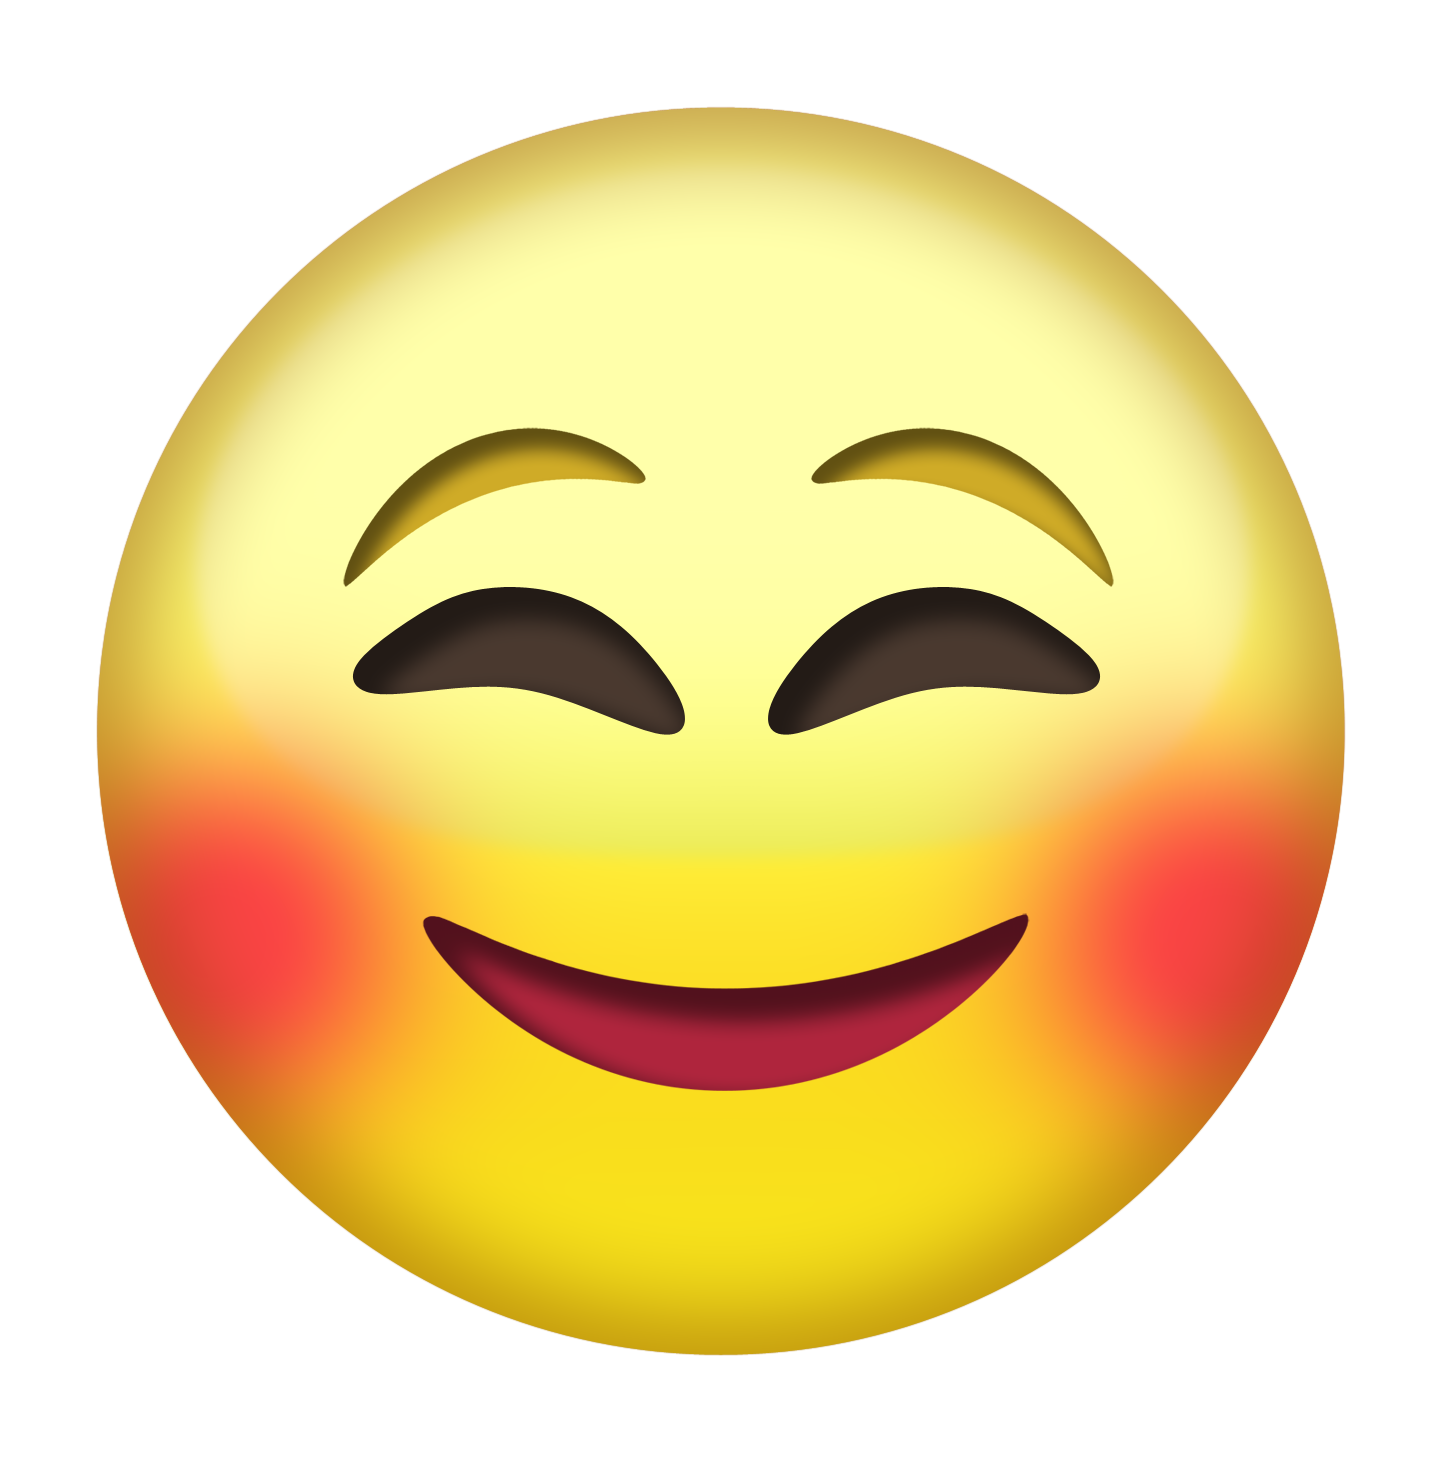 Download PNG image - Emoji Head PNG Pic 